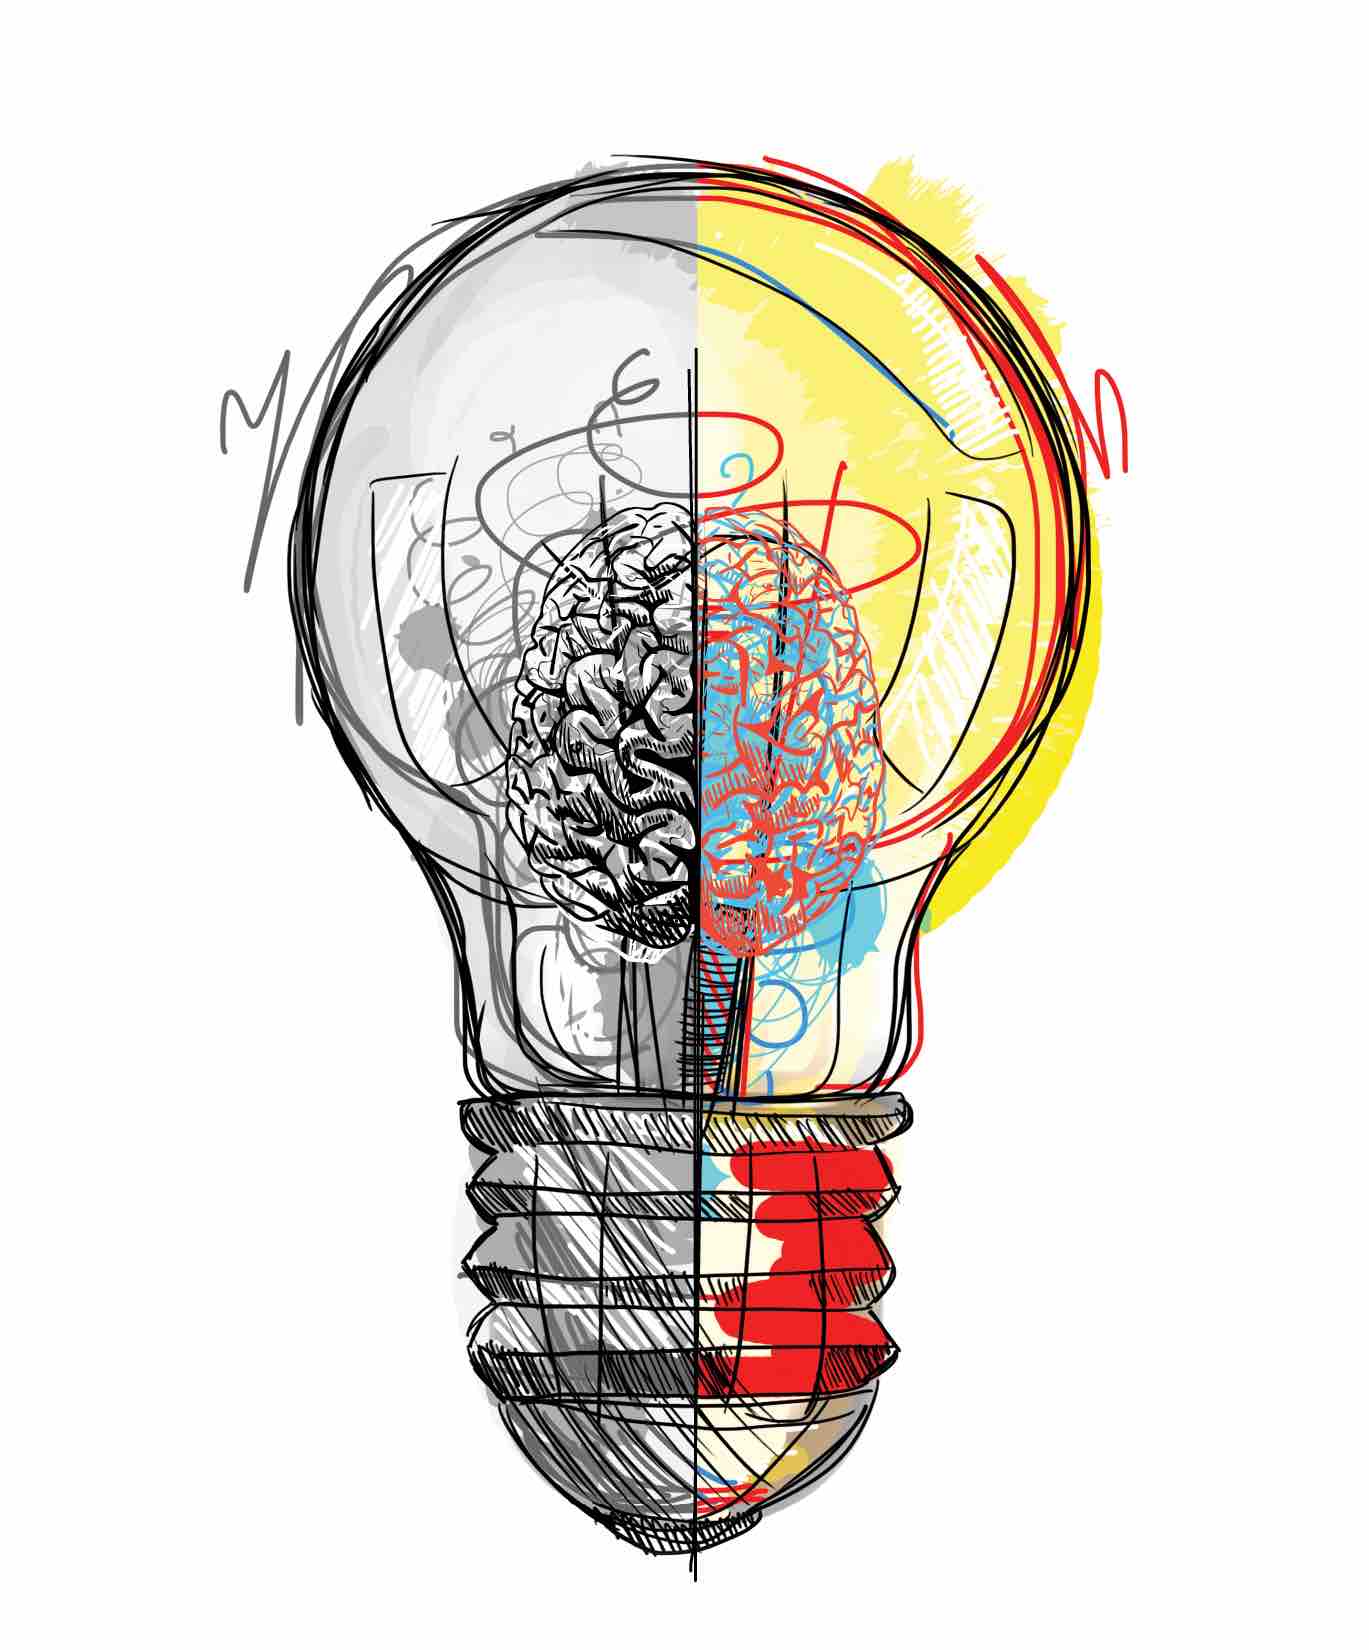 Illustration of lightbulb